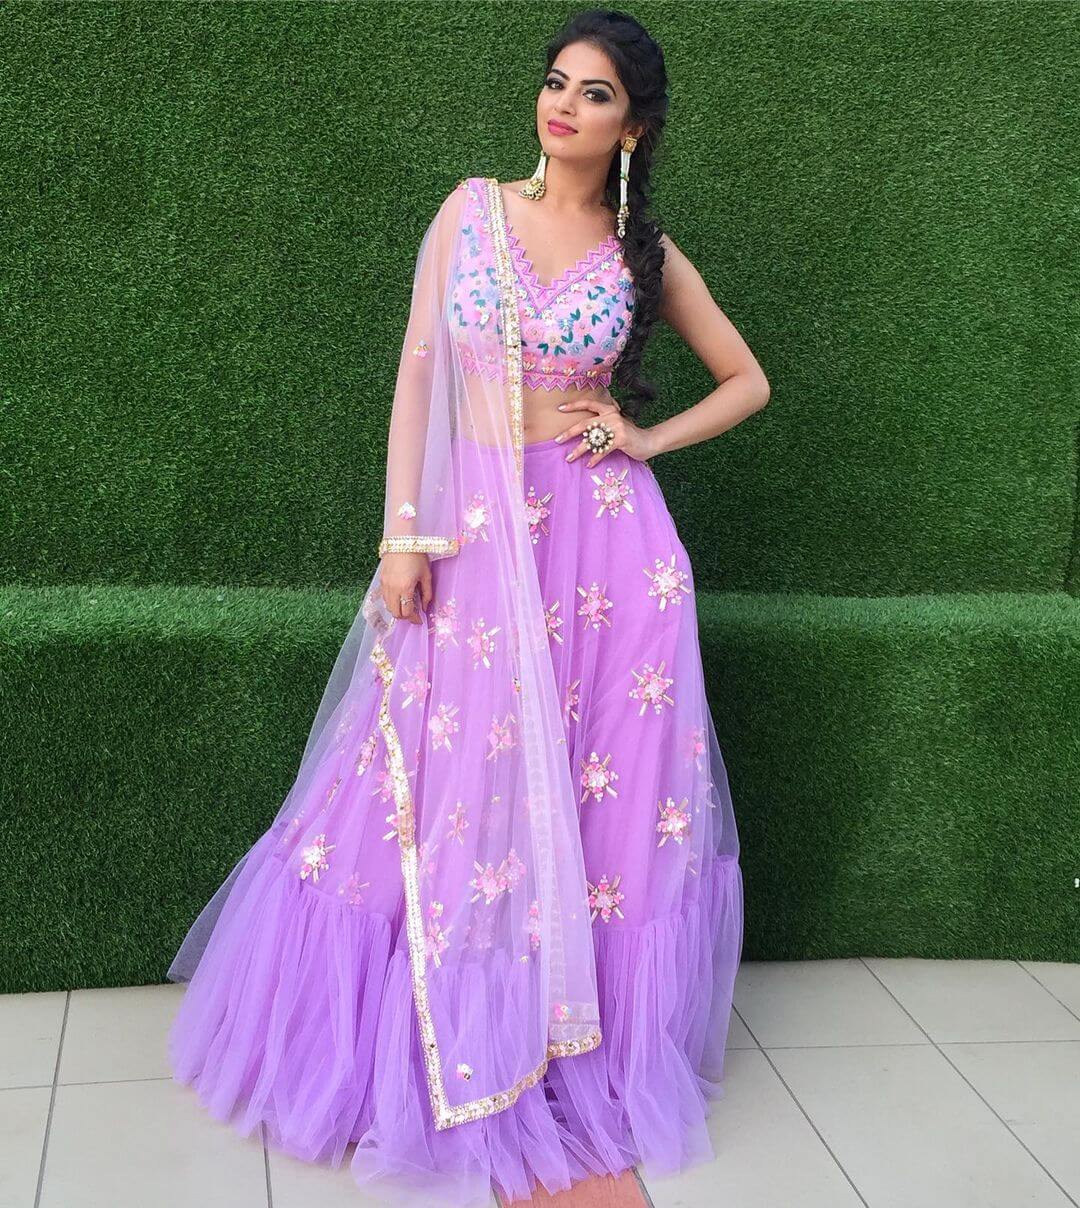 Roshni Sahota Is Giving Us Major Bridesmaid Outfit Goal In Light Purple Lehenga Outfit